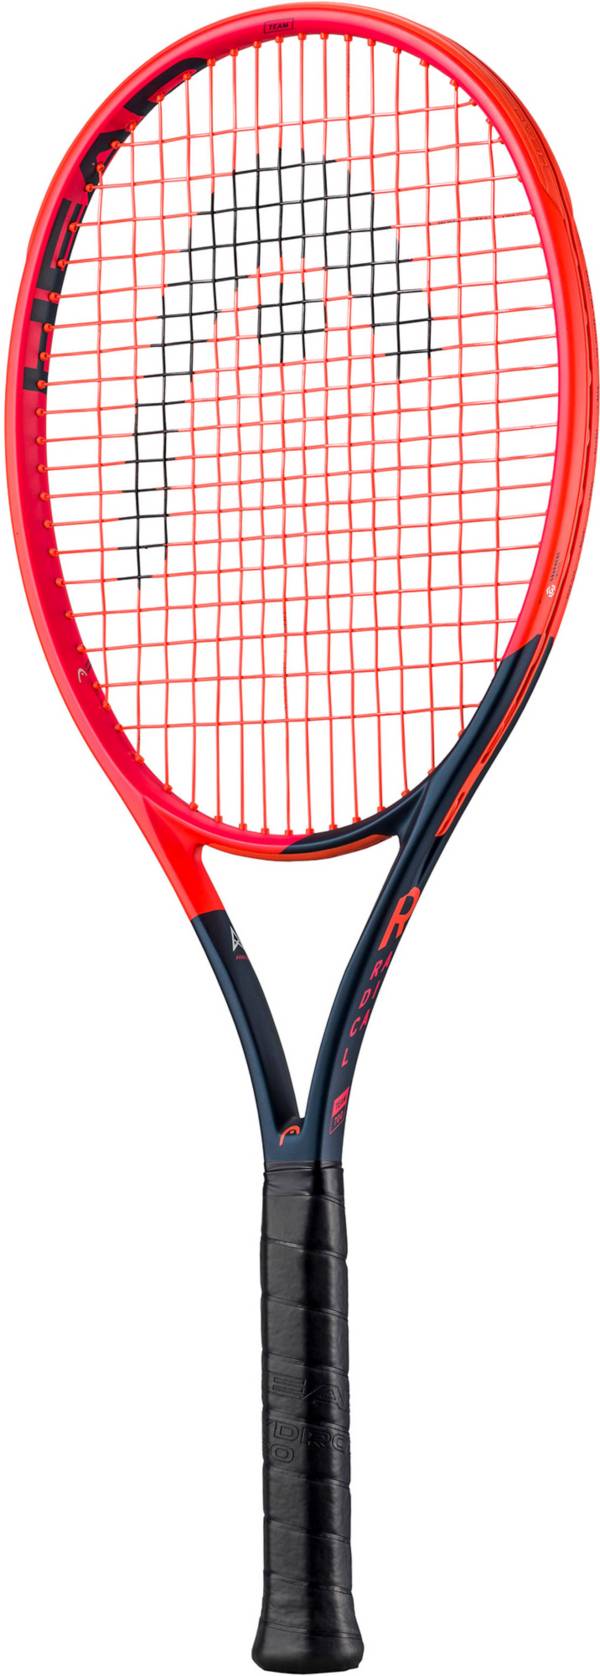 Head Radical Team Tennis Racquet - Unstrung product image